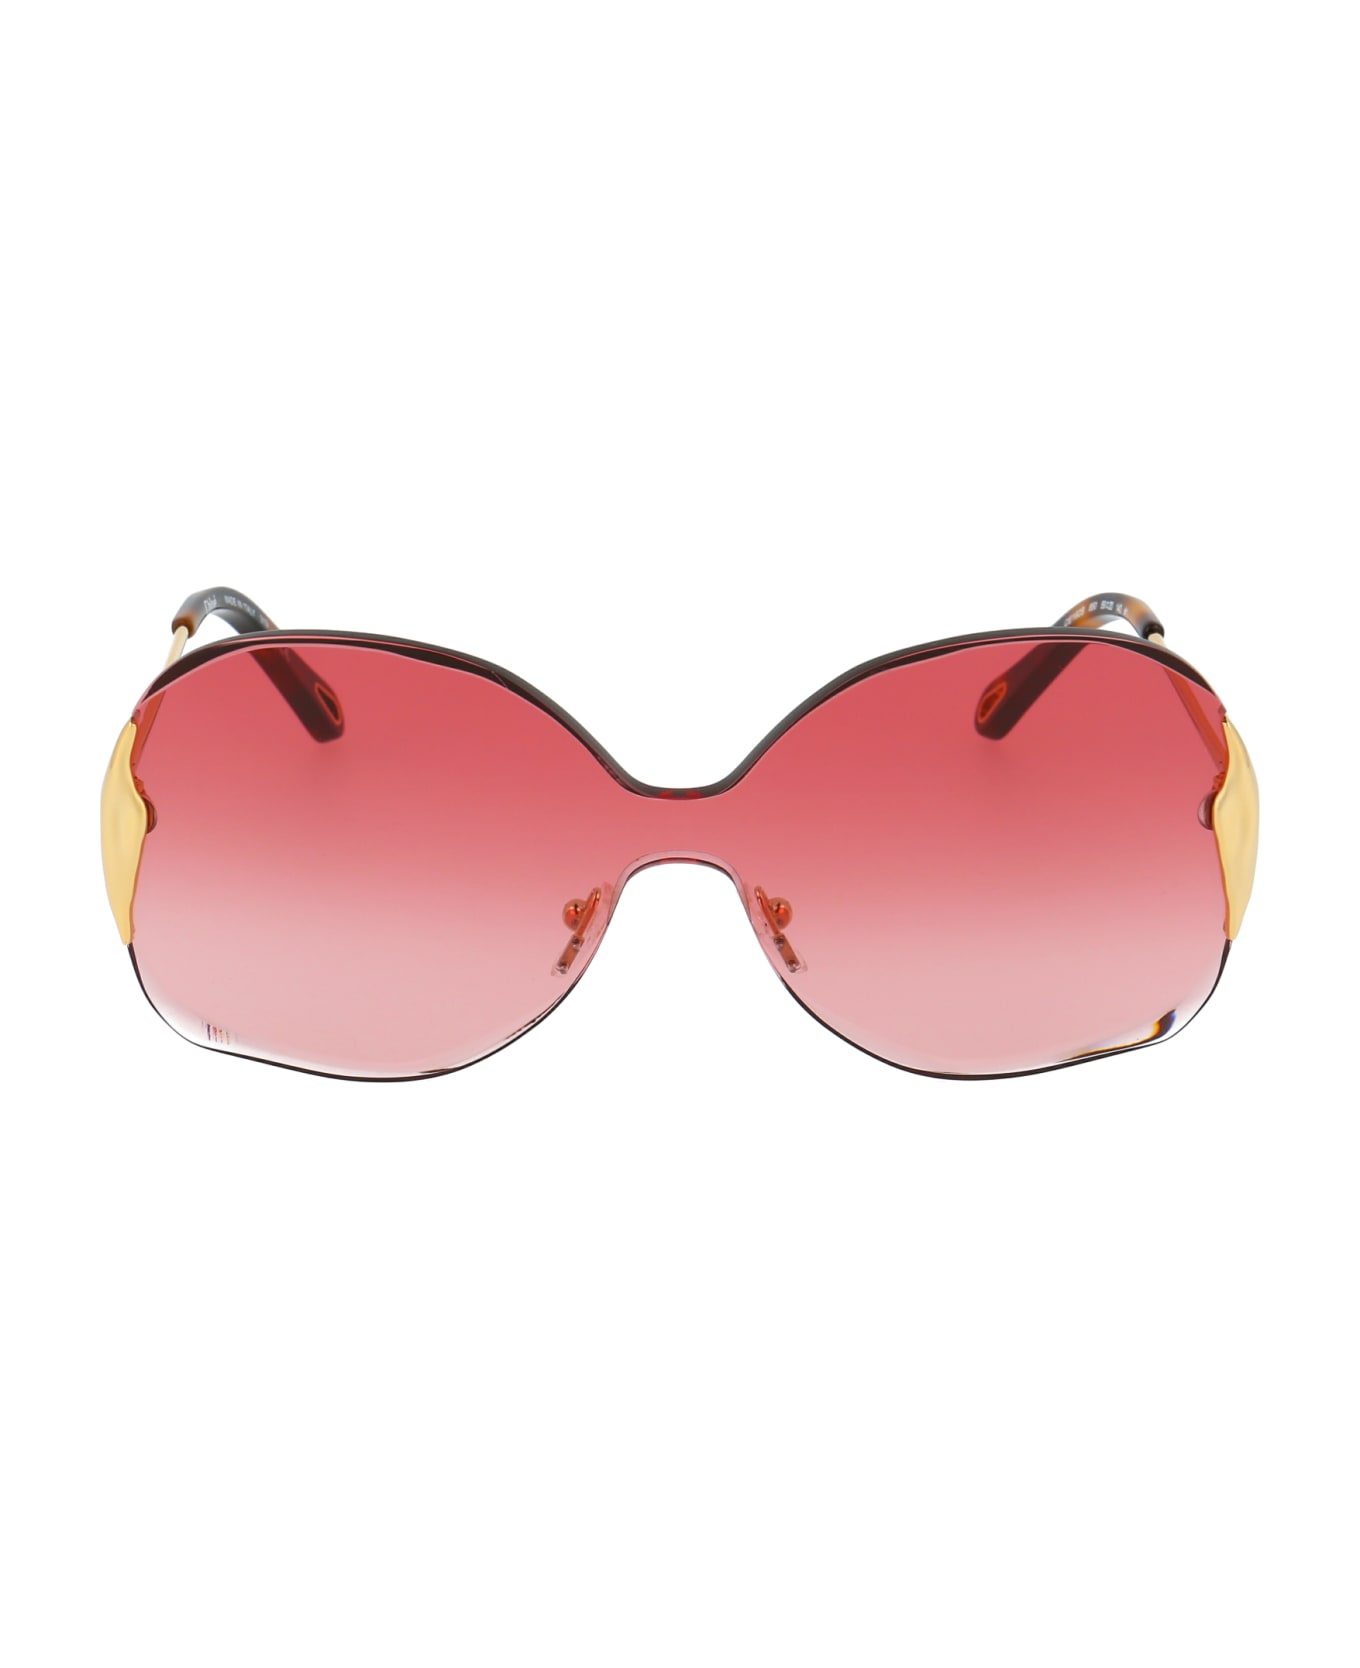 Chloé Eyewear Ce162s Sunglasses - 850 GOLD GRADIENT